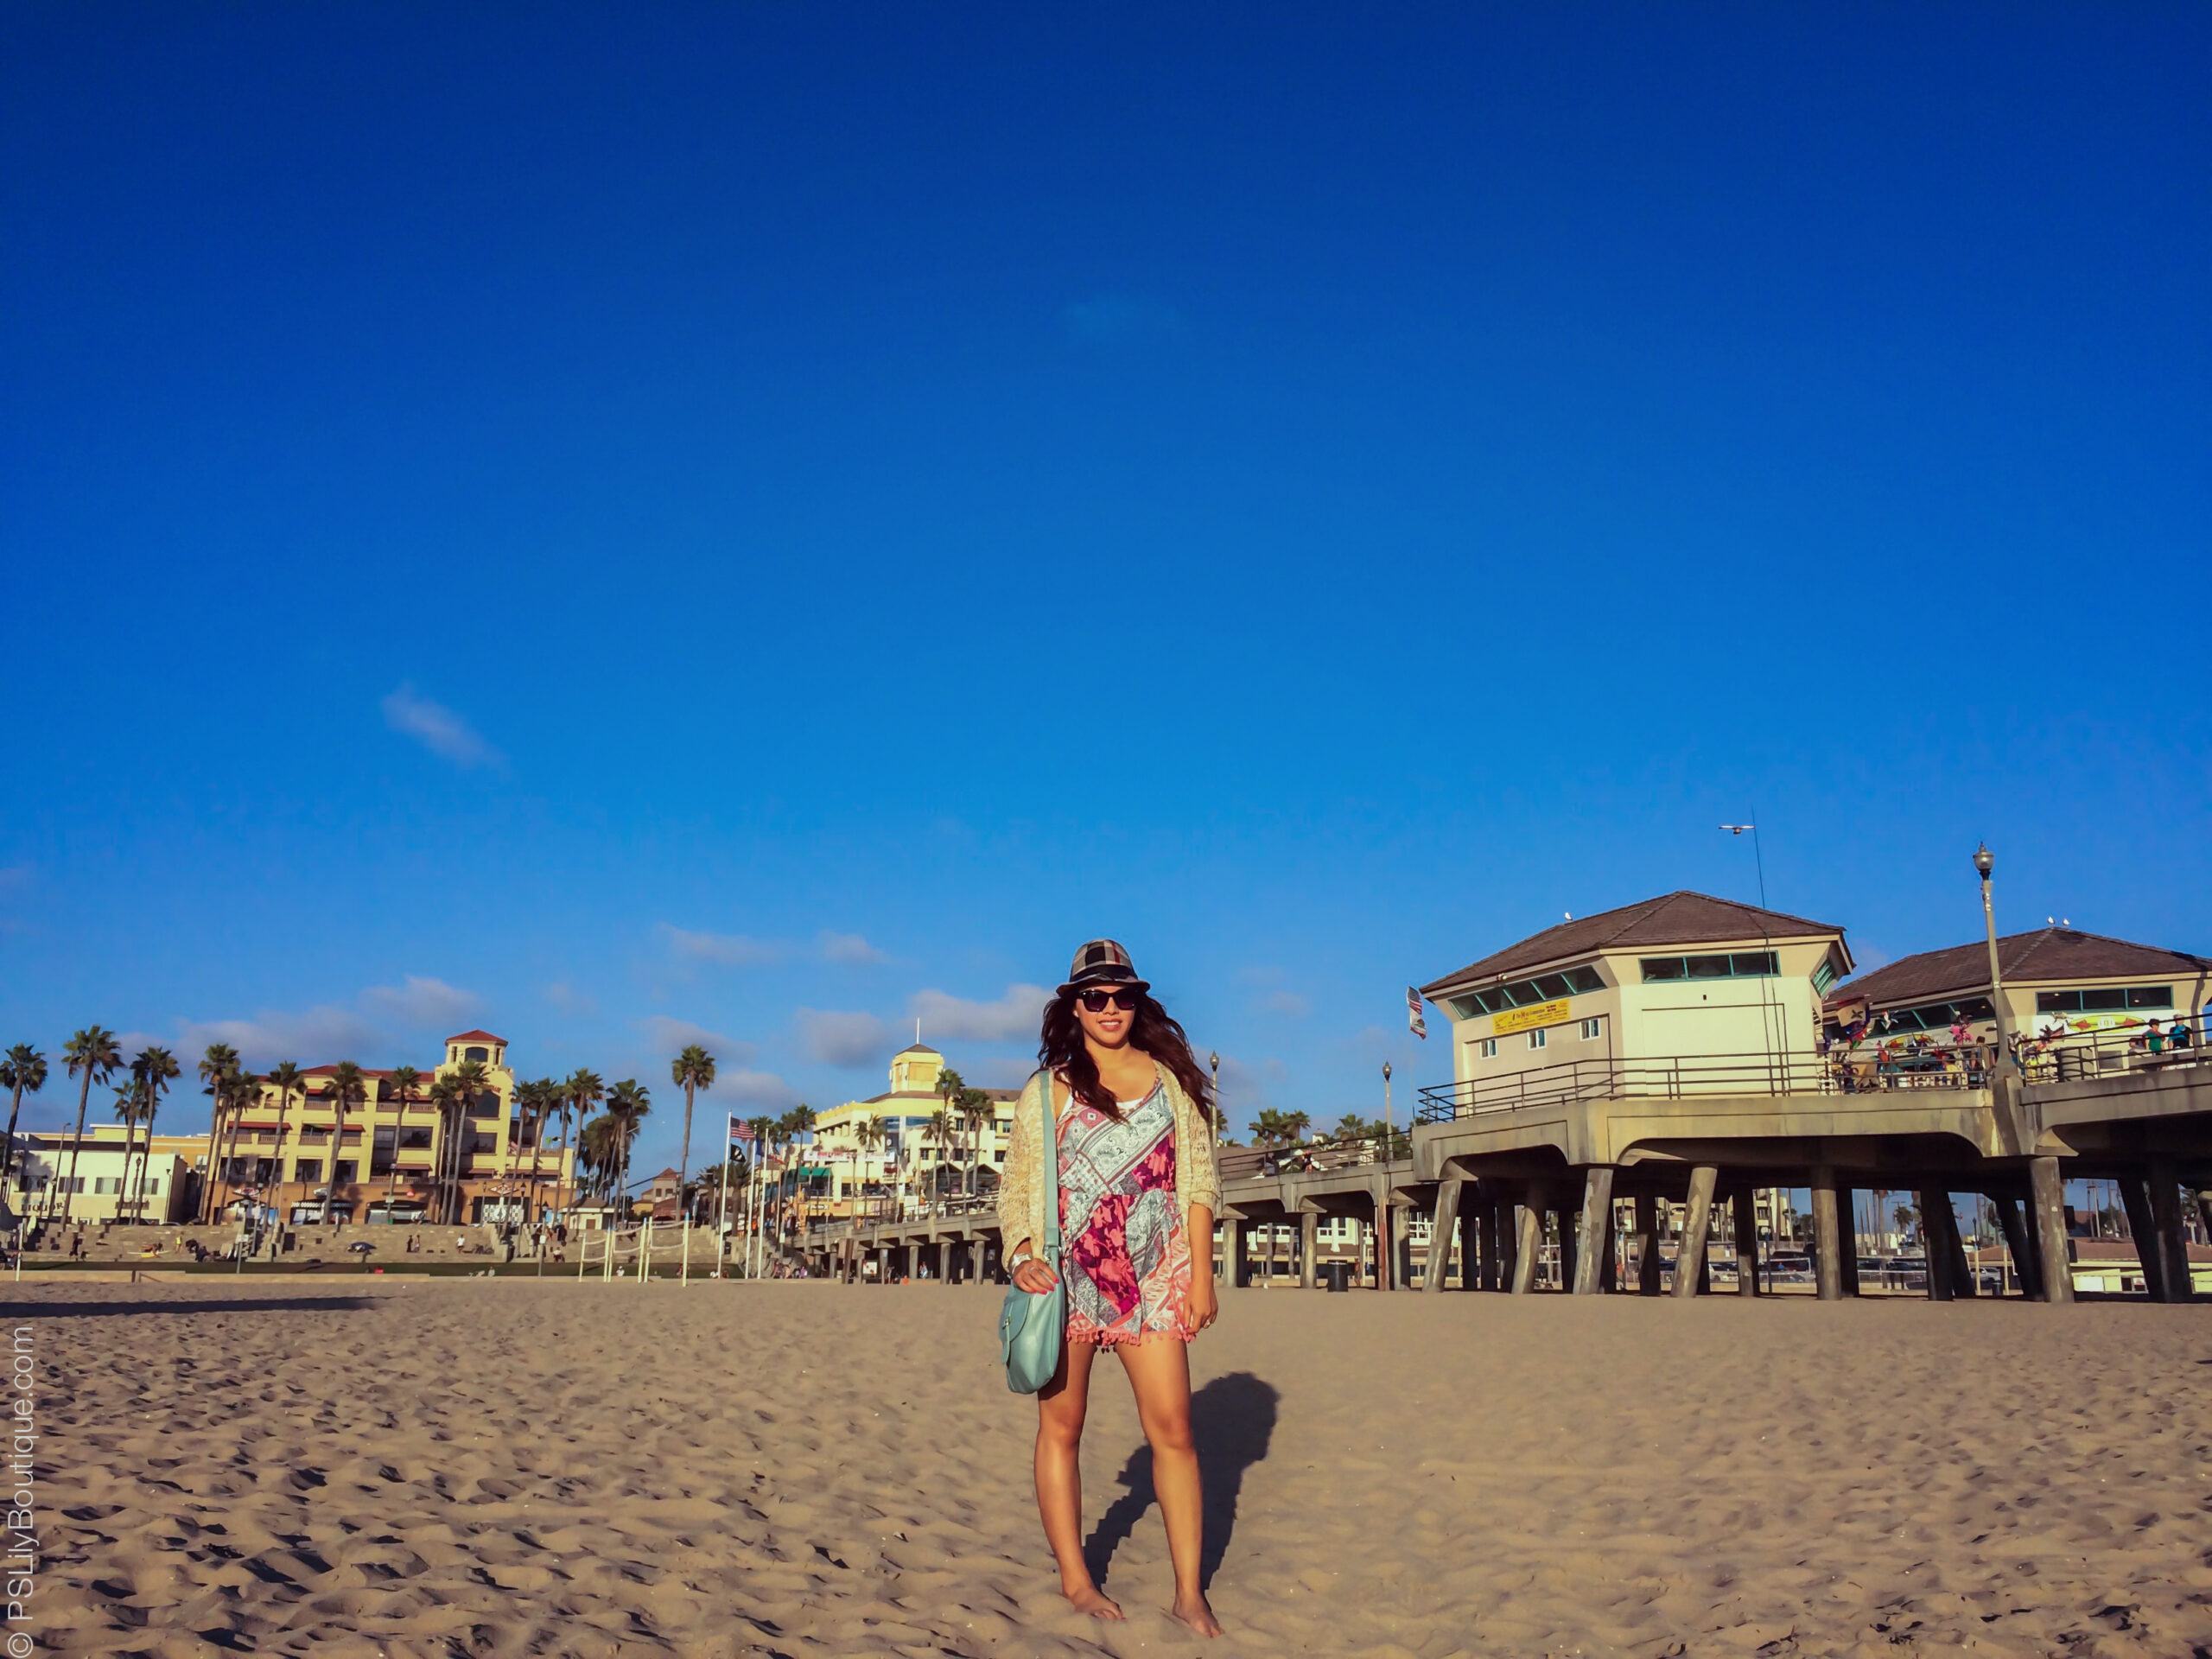 instagram-pslilyboutique-los-angeles-fashion-blogger-raga-la-multicolor-samaoan-sand-romper-spring-summer-outfit-ideas-huntington-beach-california-travel-10-23-15